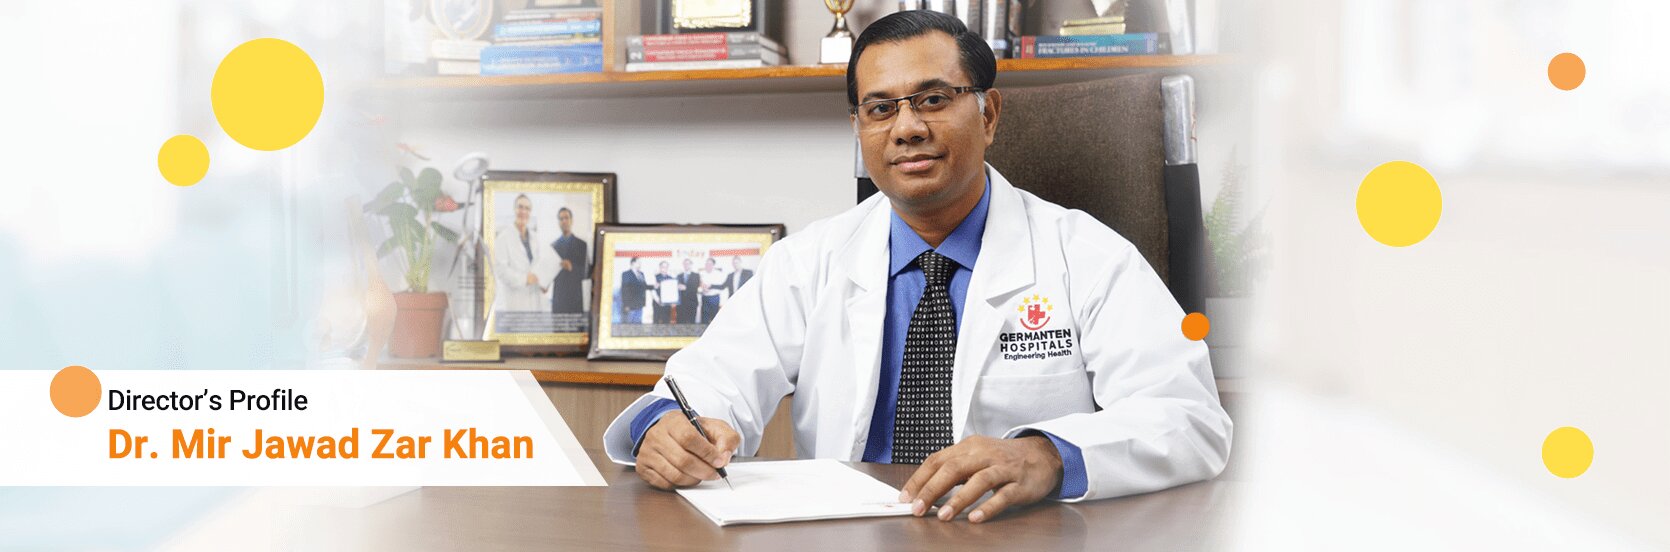 Best Orthopedic Surgeon in Hyderabad